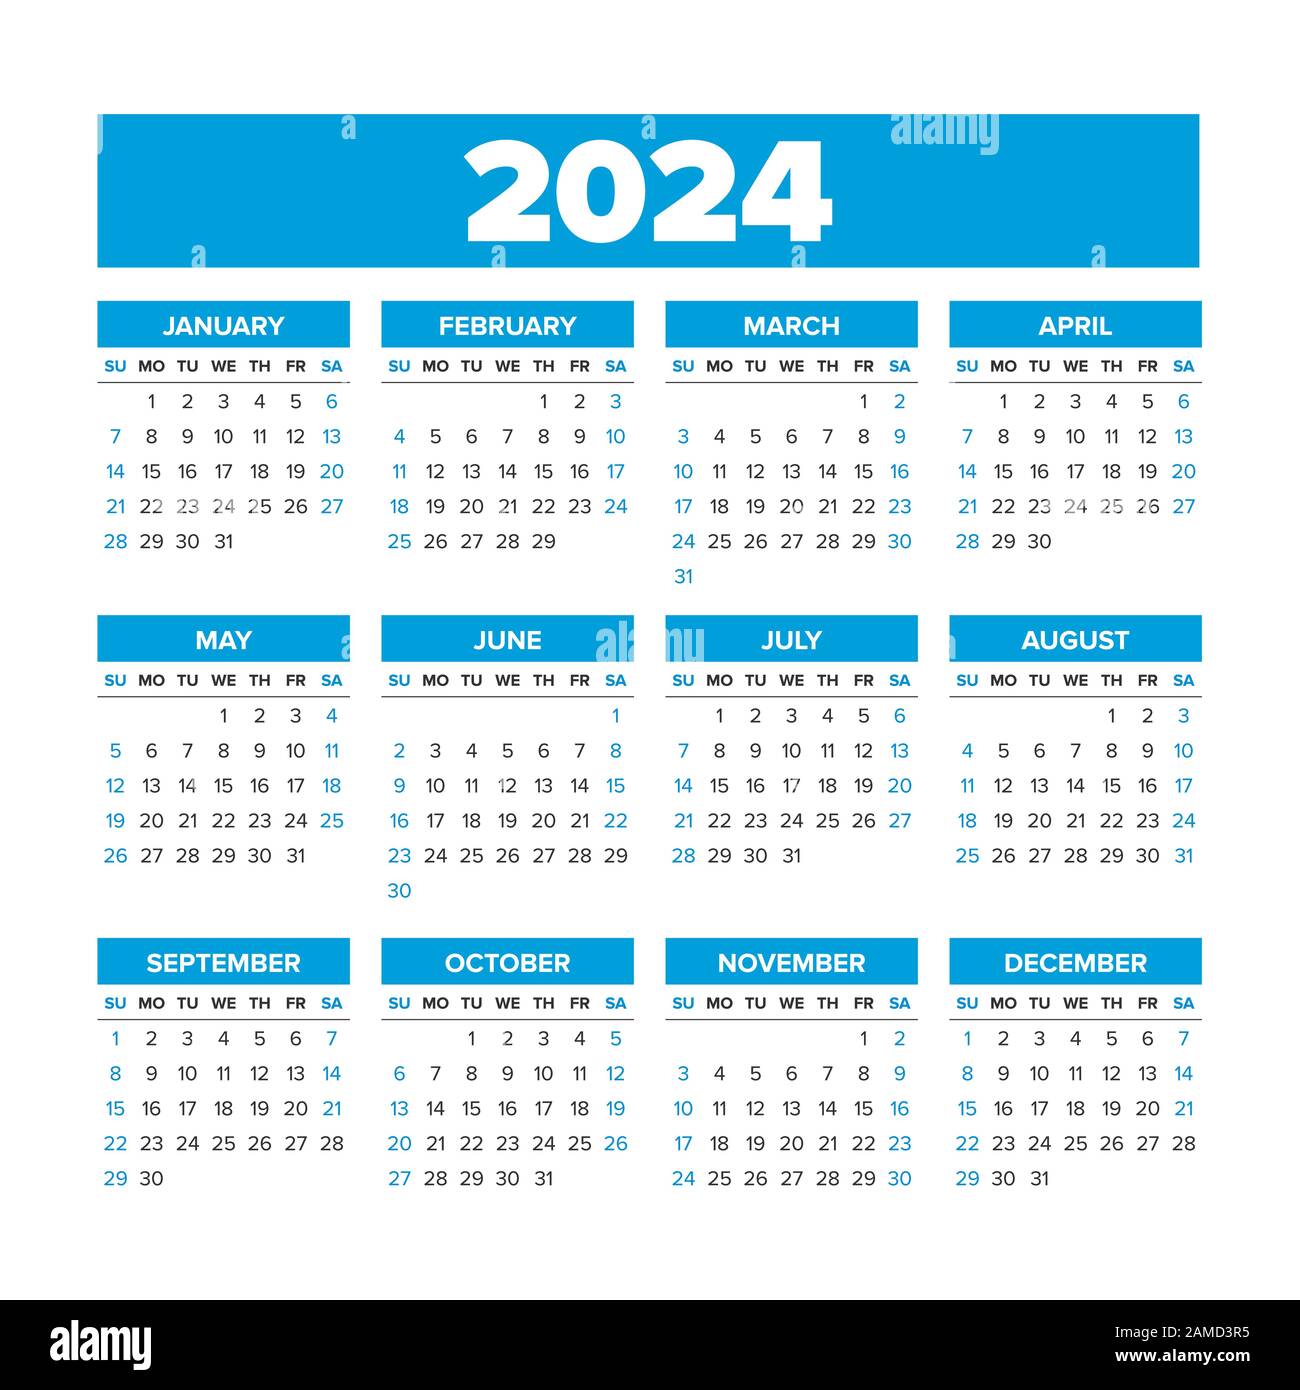 2024 Calendar With The Weeks Numbered 2021 Rey Kristyn